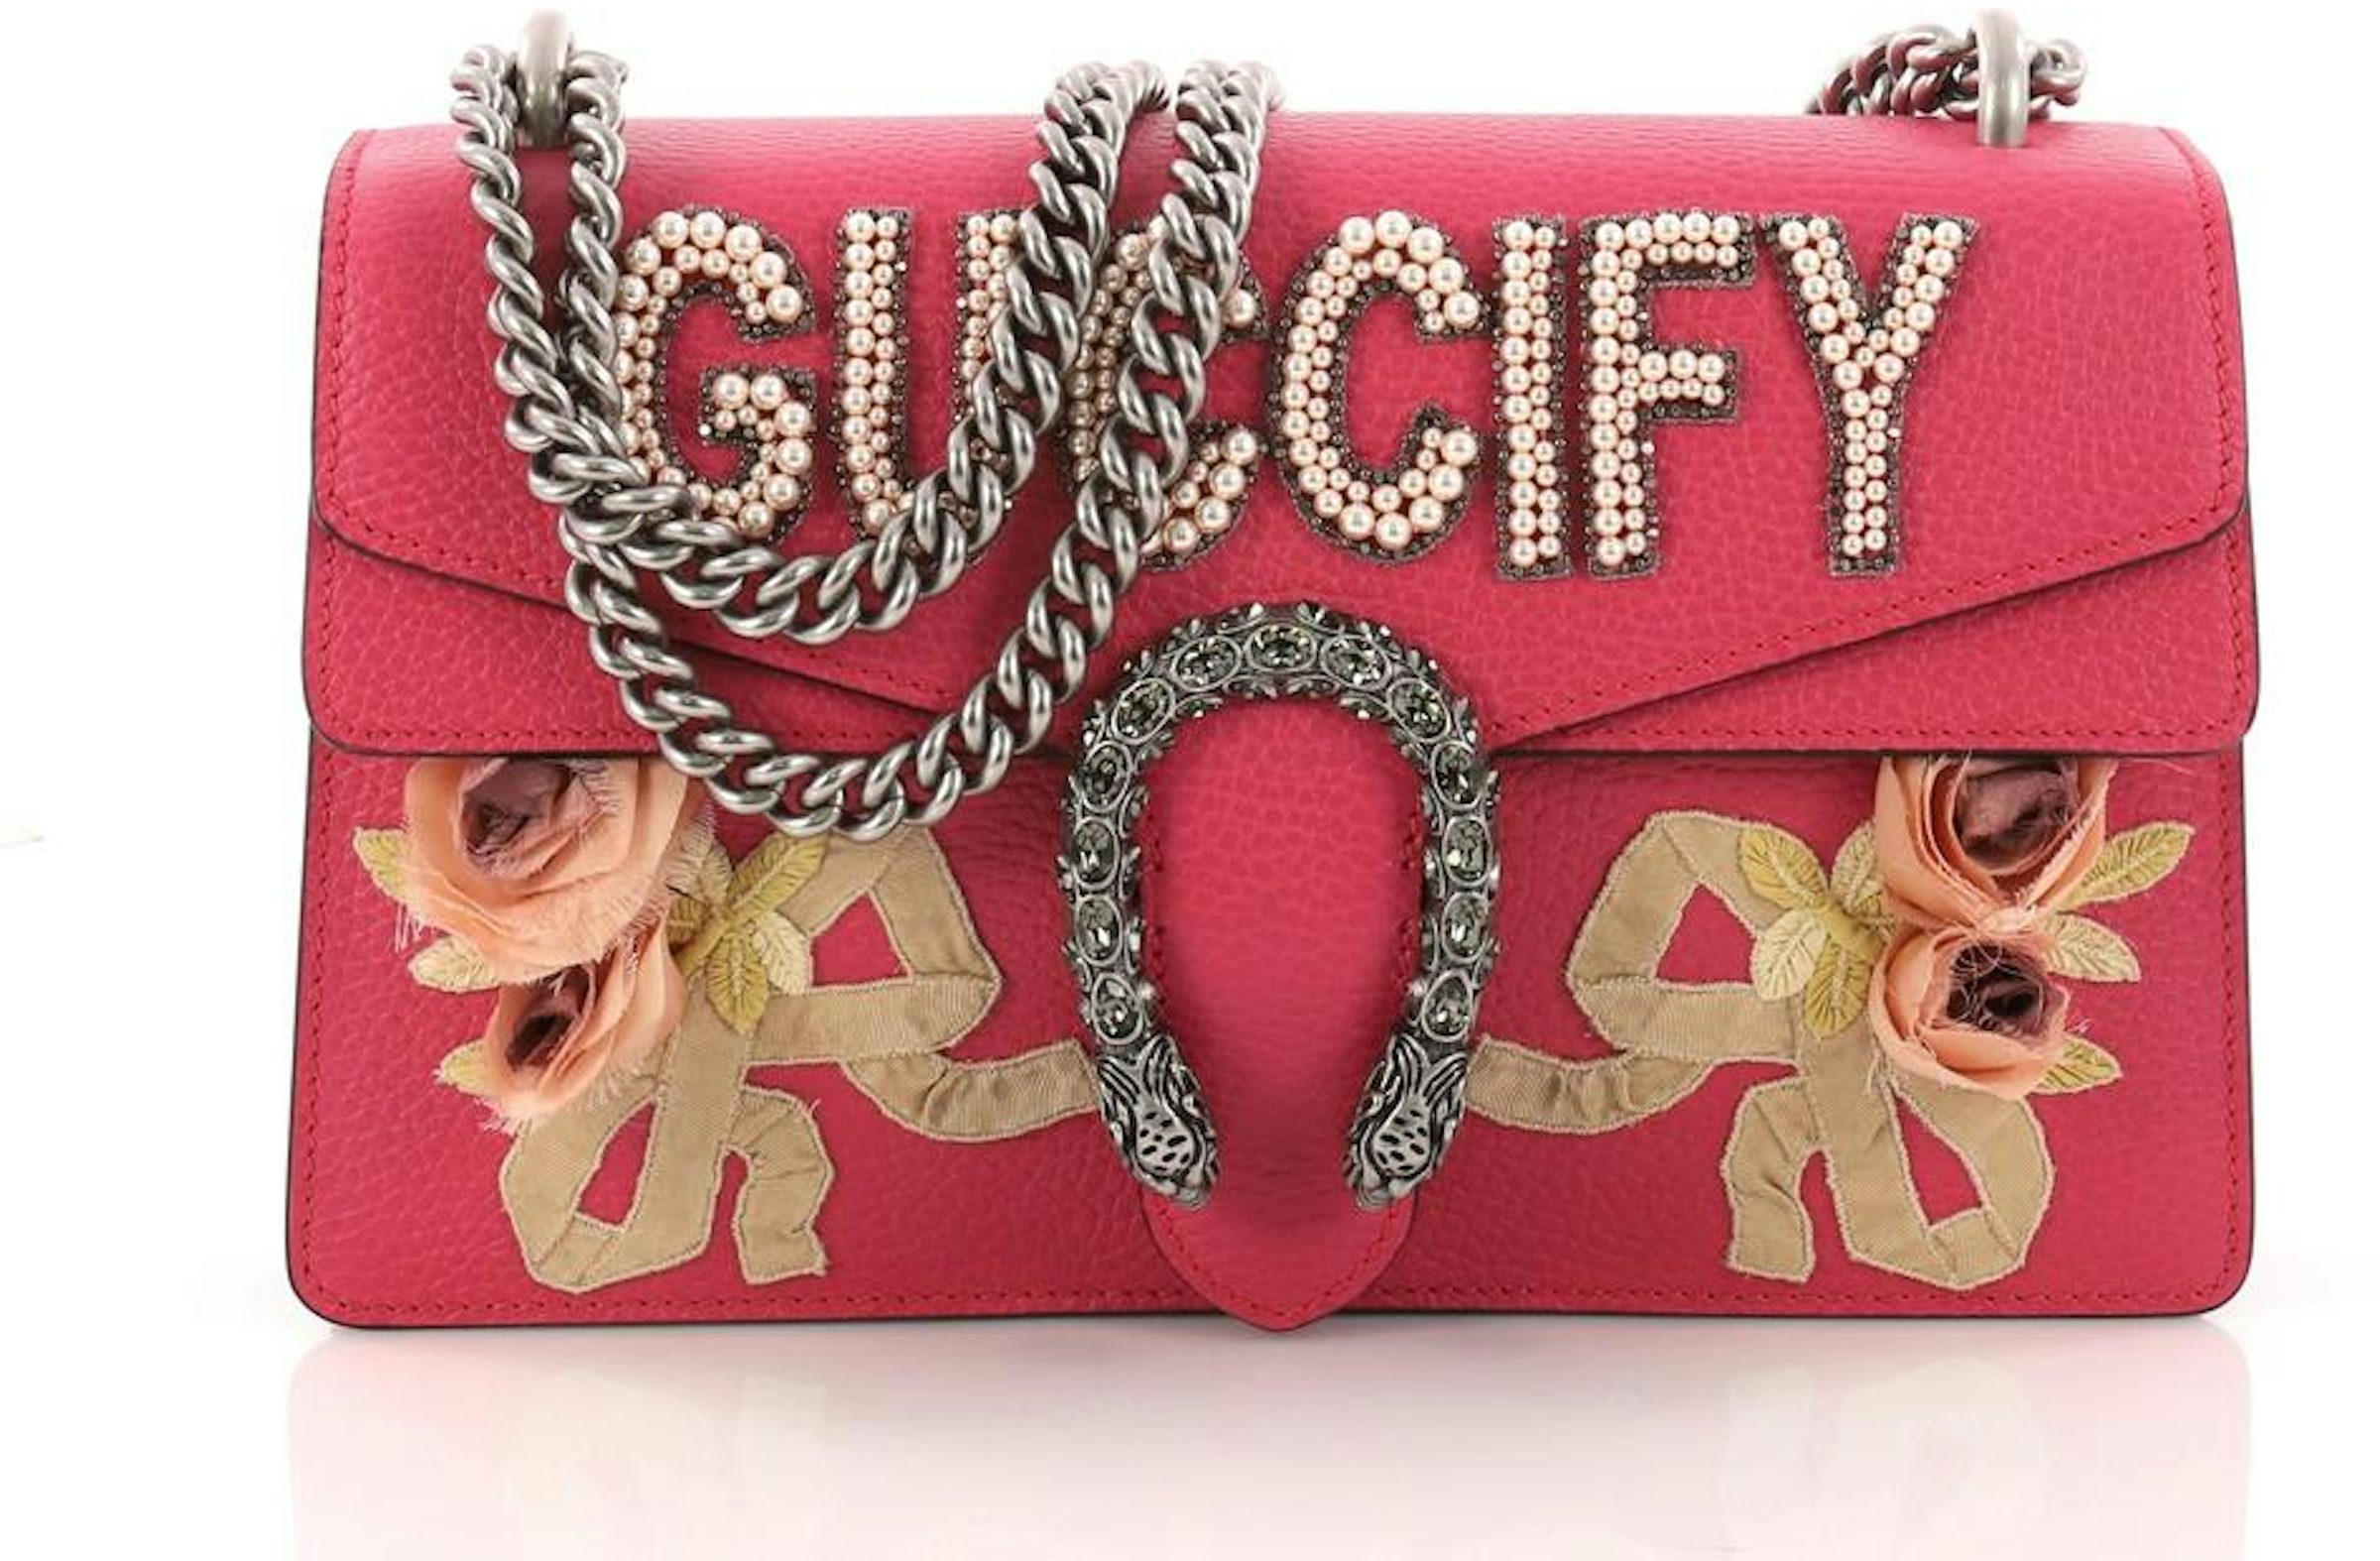 Gucci Dionysus Mini Embellished Leather Tote